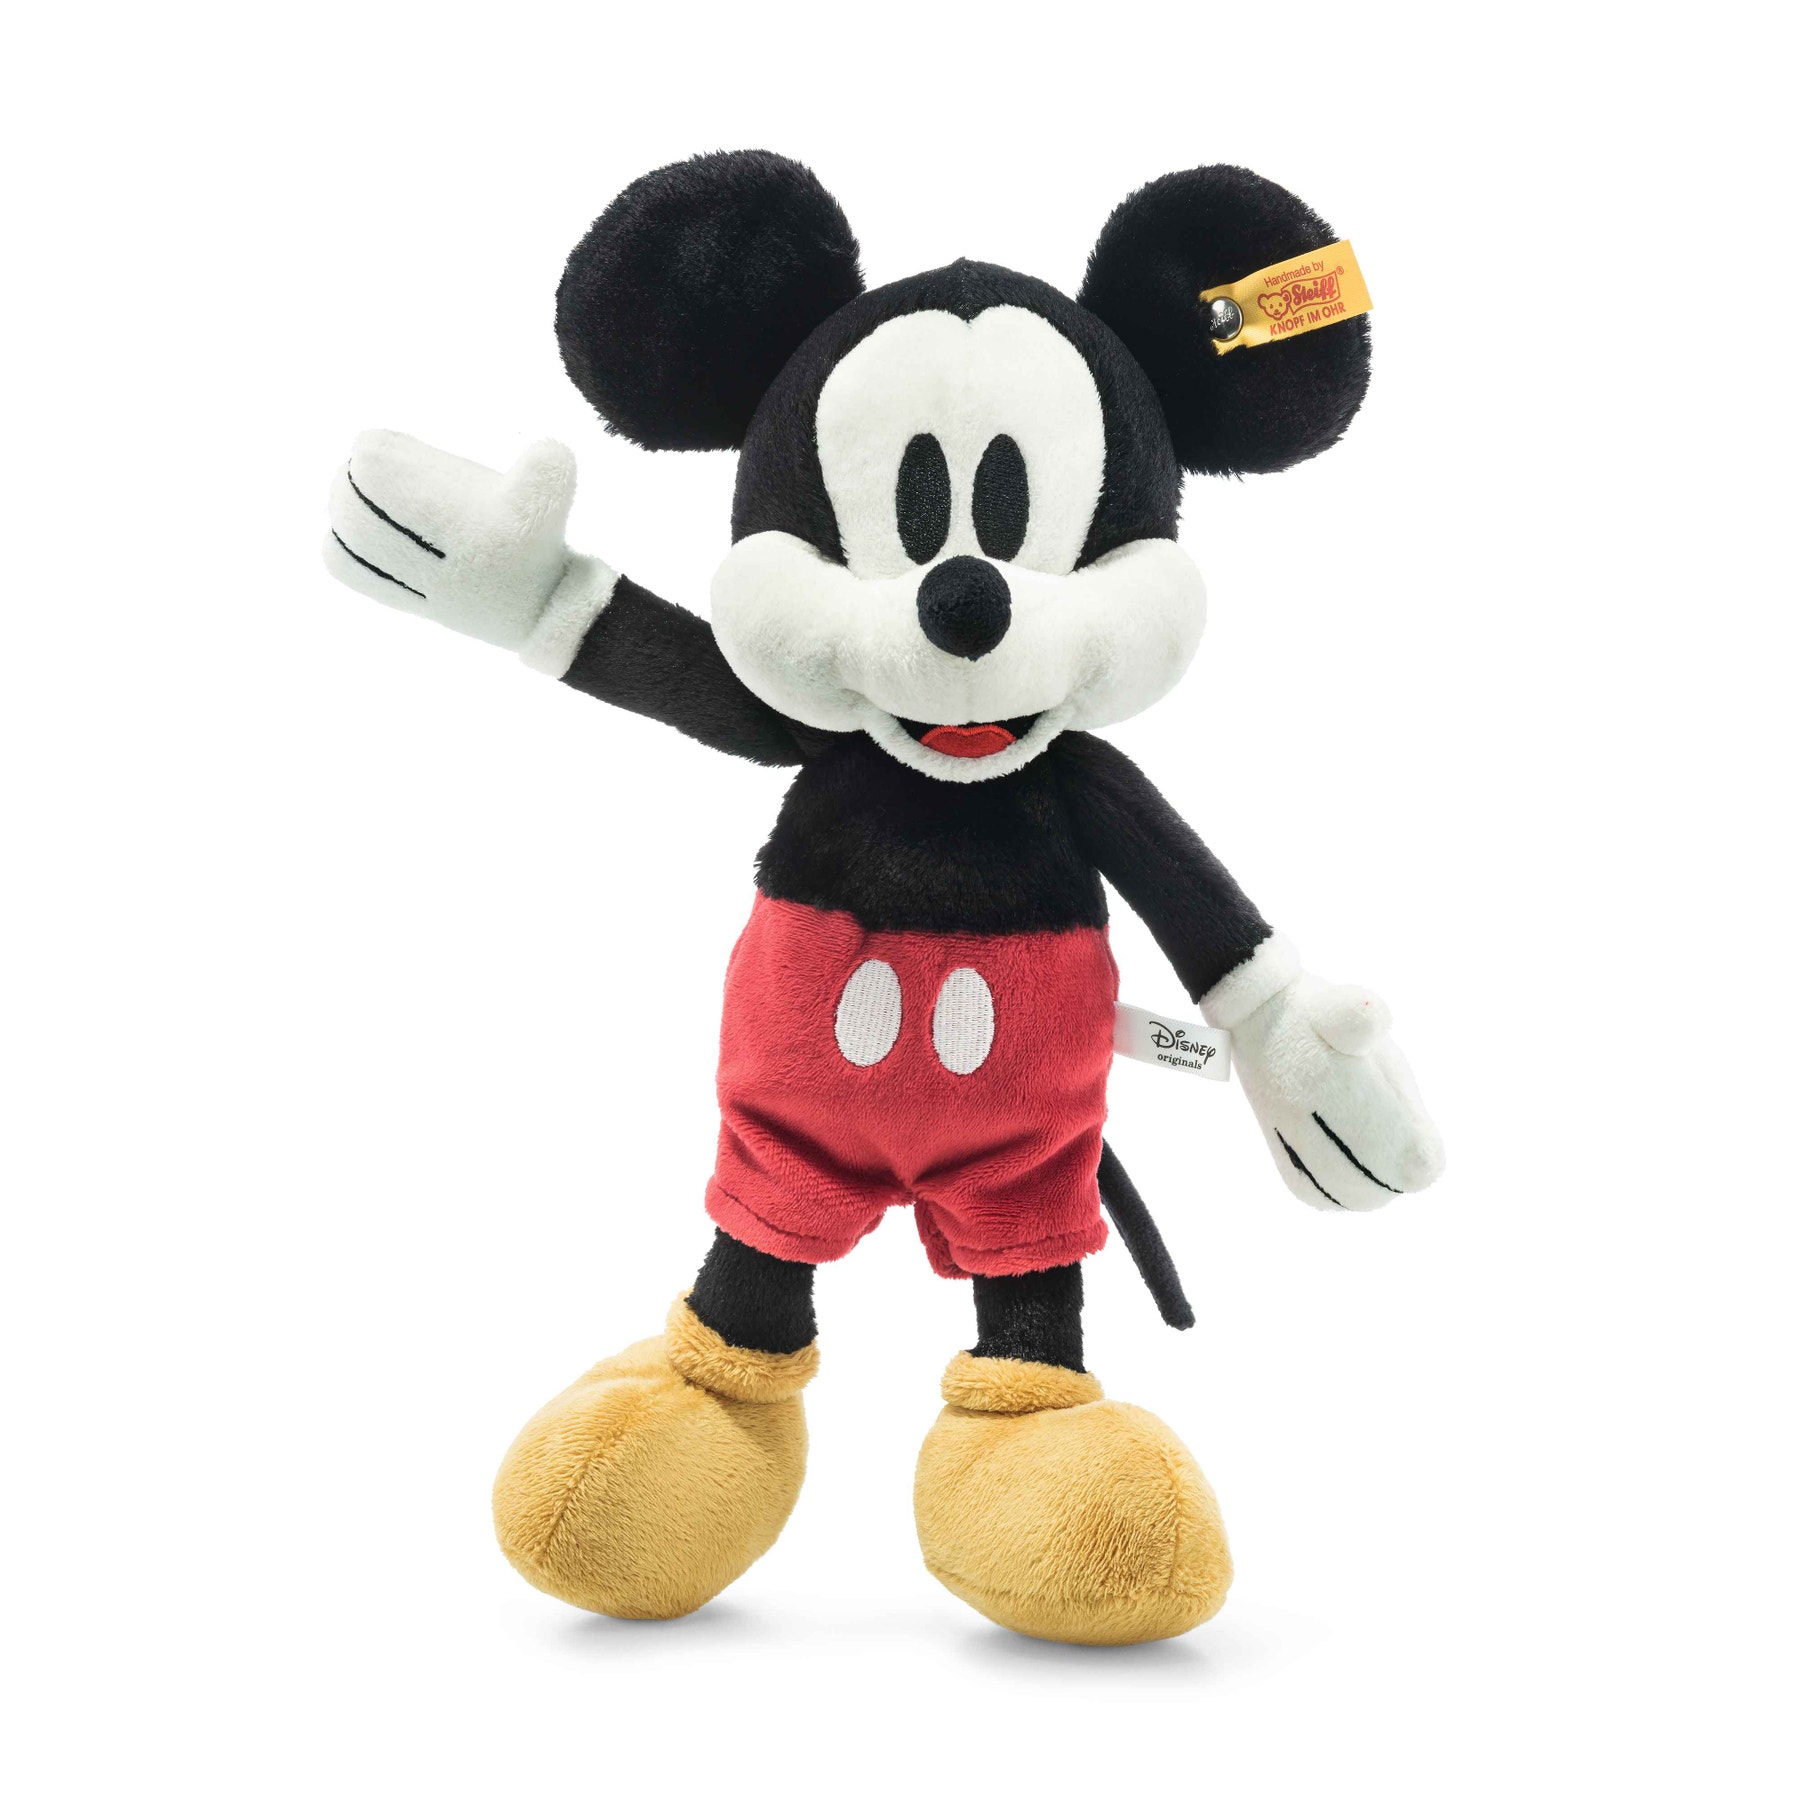 Disney’s Mickey Mouse